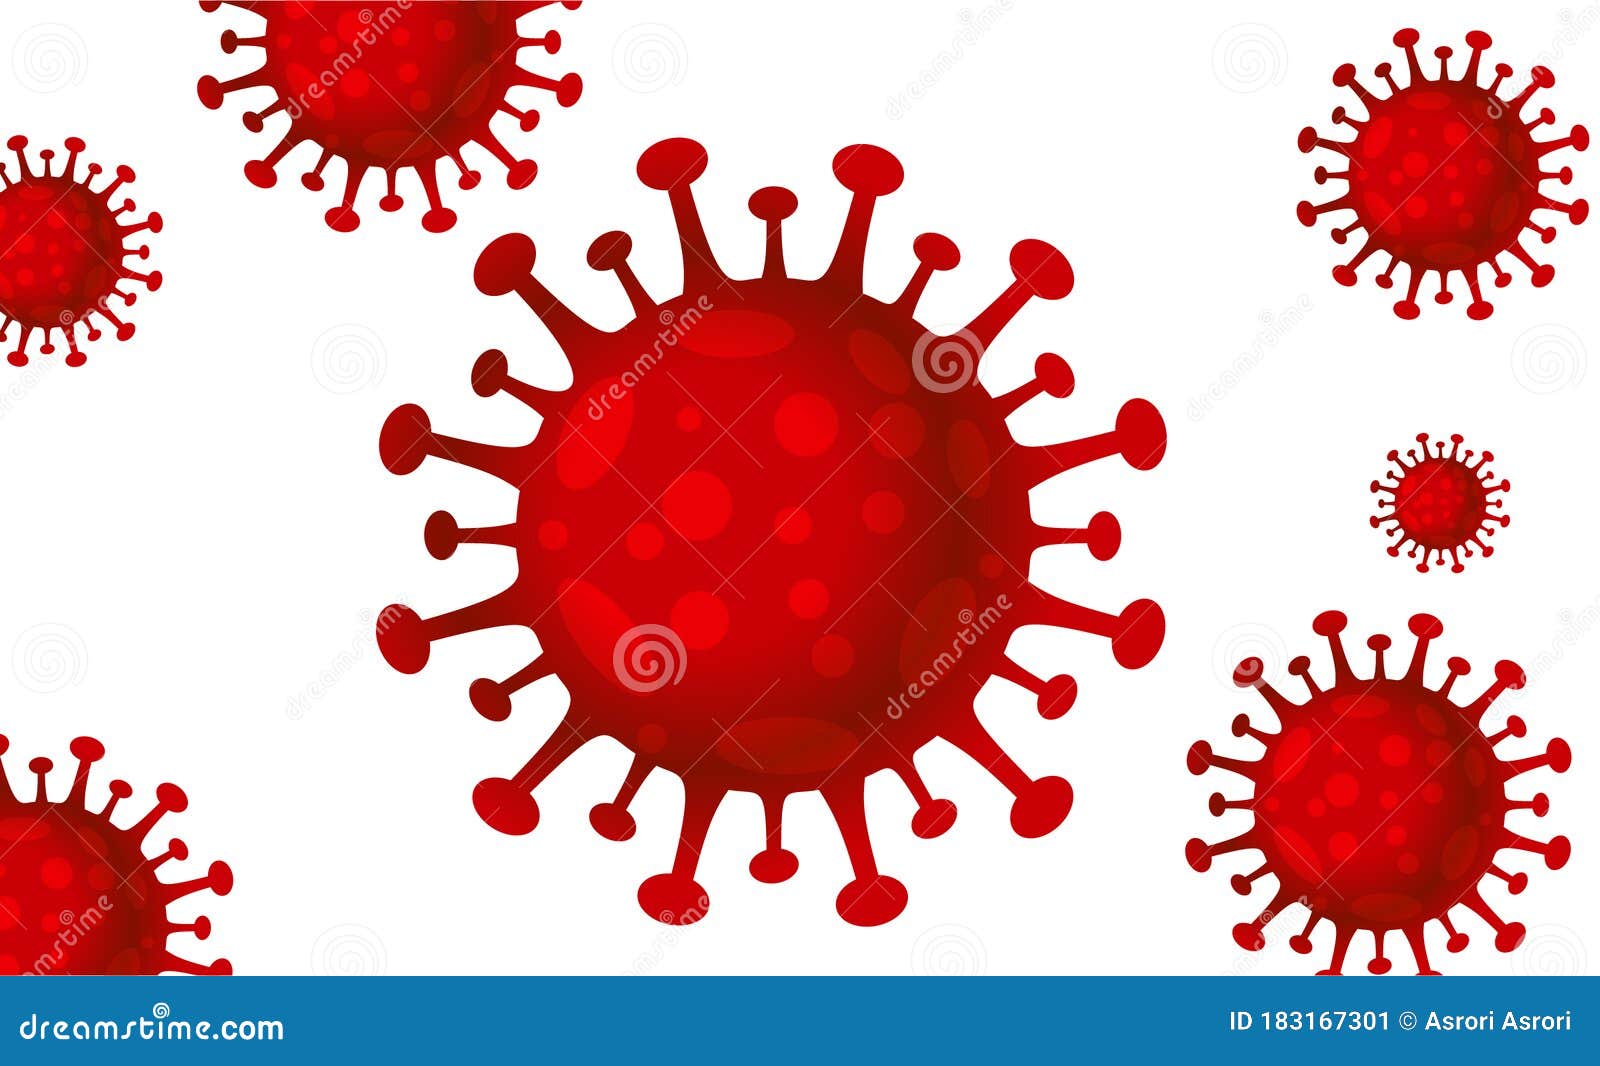 corona virus molecule or covid-19.